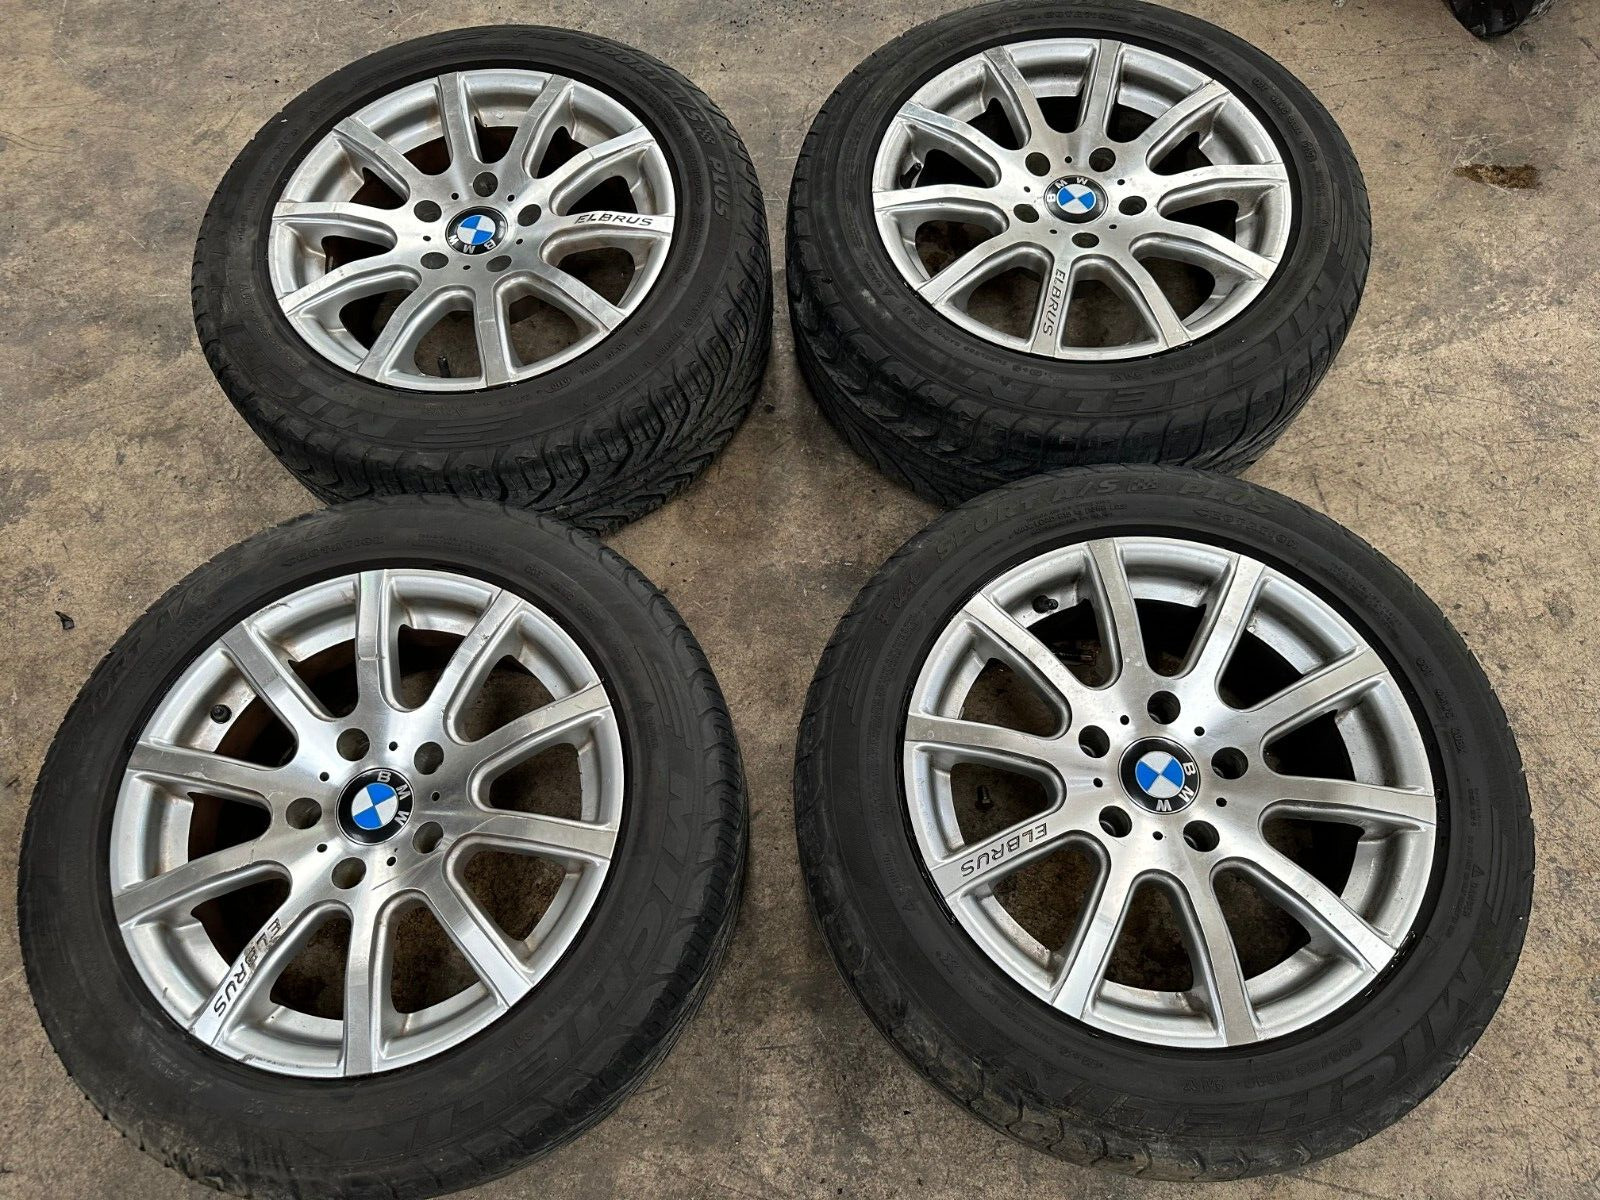 16'' Elbrus Wheel Light Alloy Rim Set E28 535I 528e 7.5'' Wide BMW OEM 154K